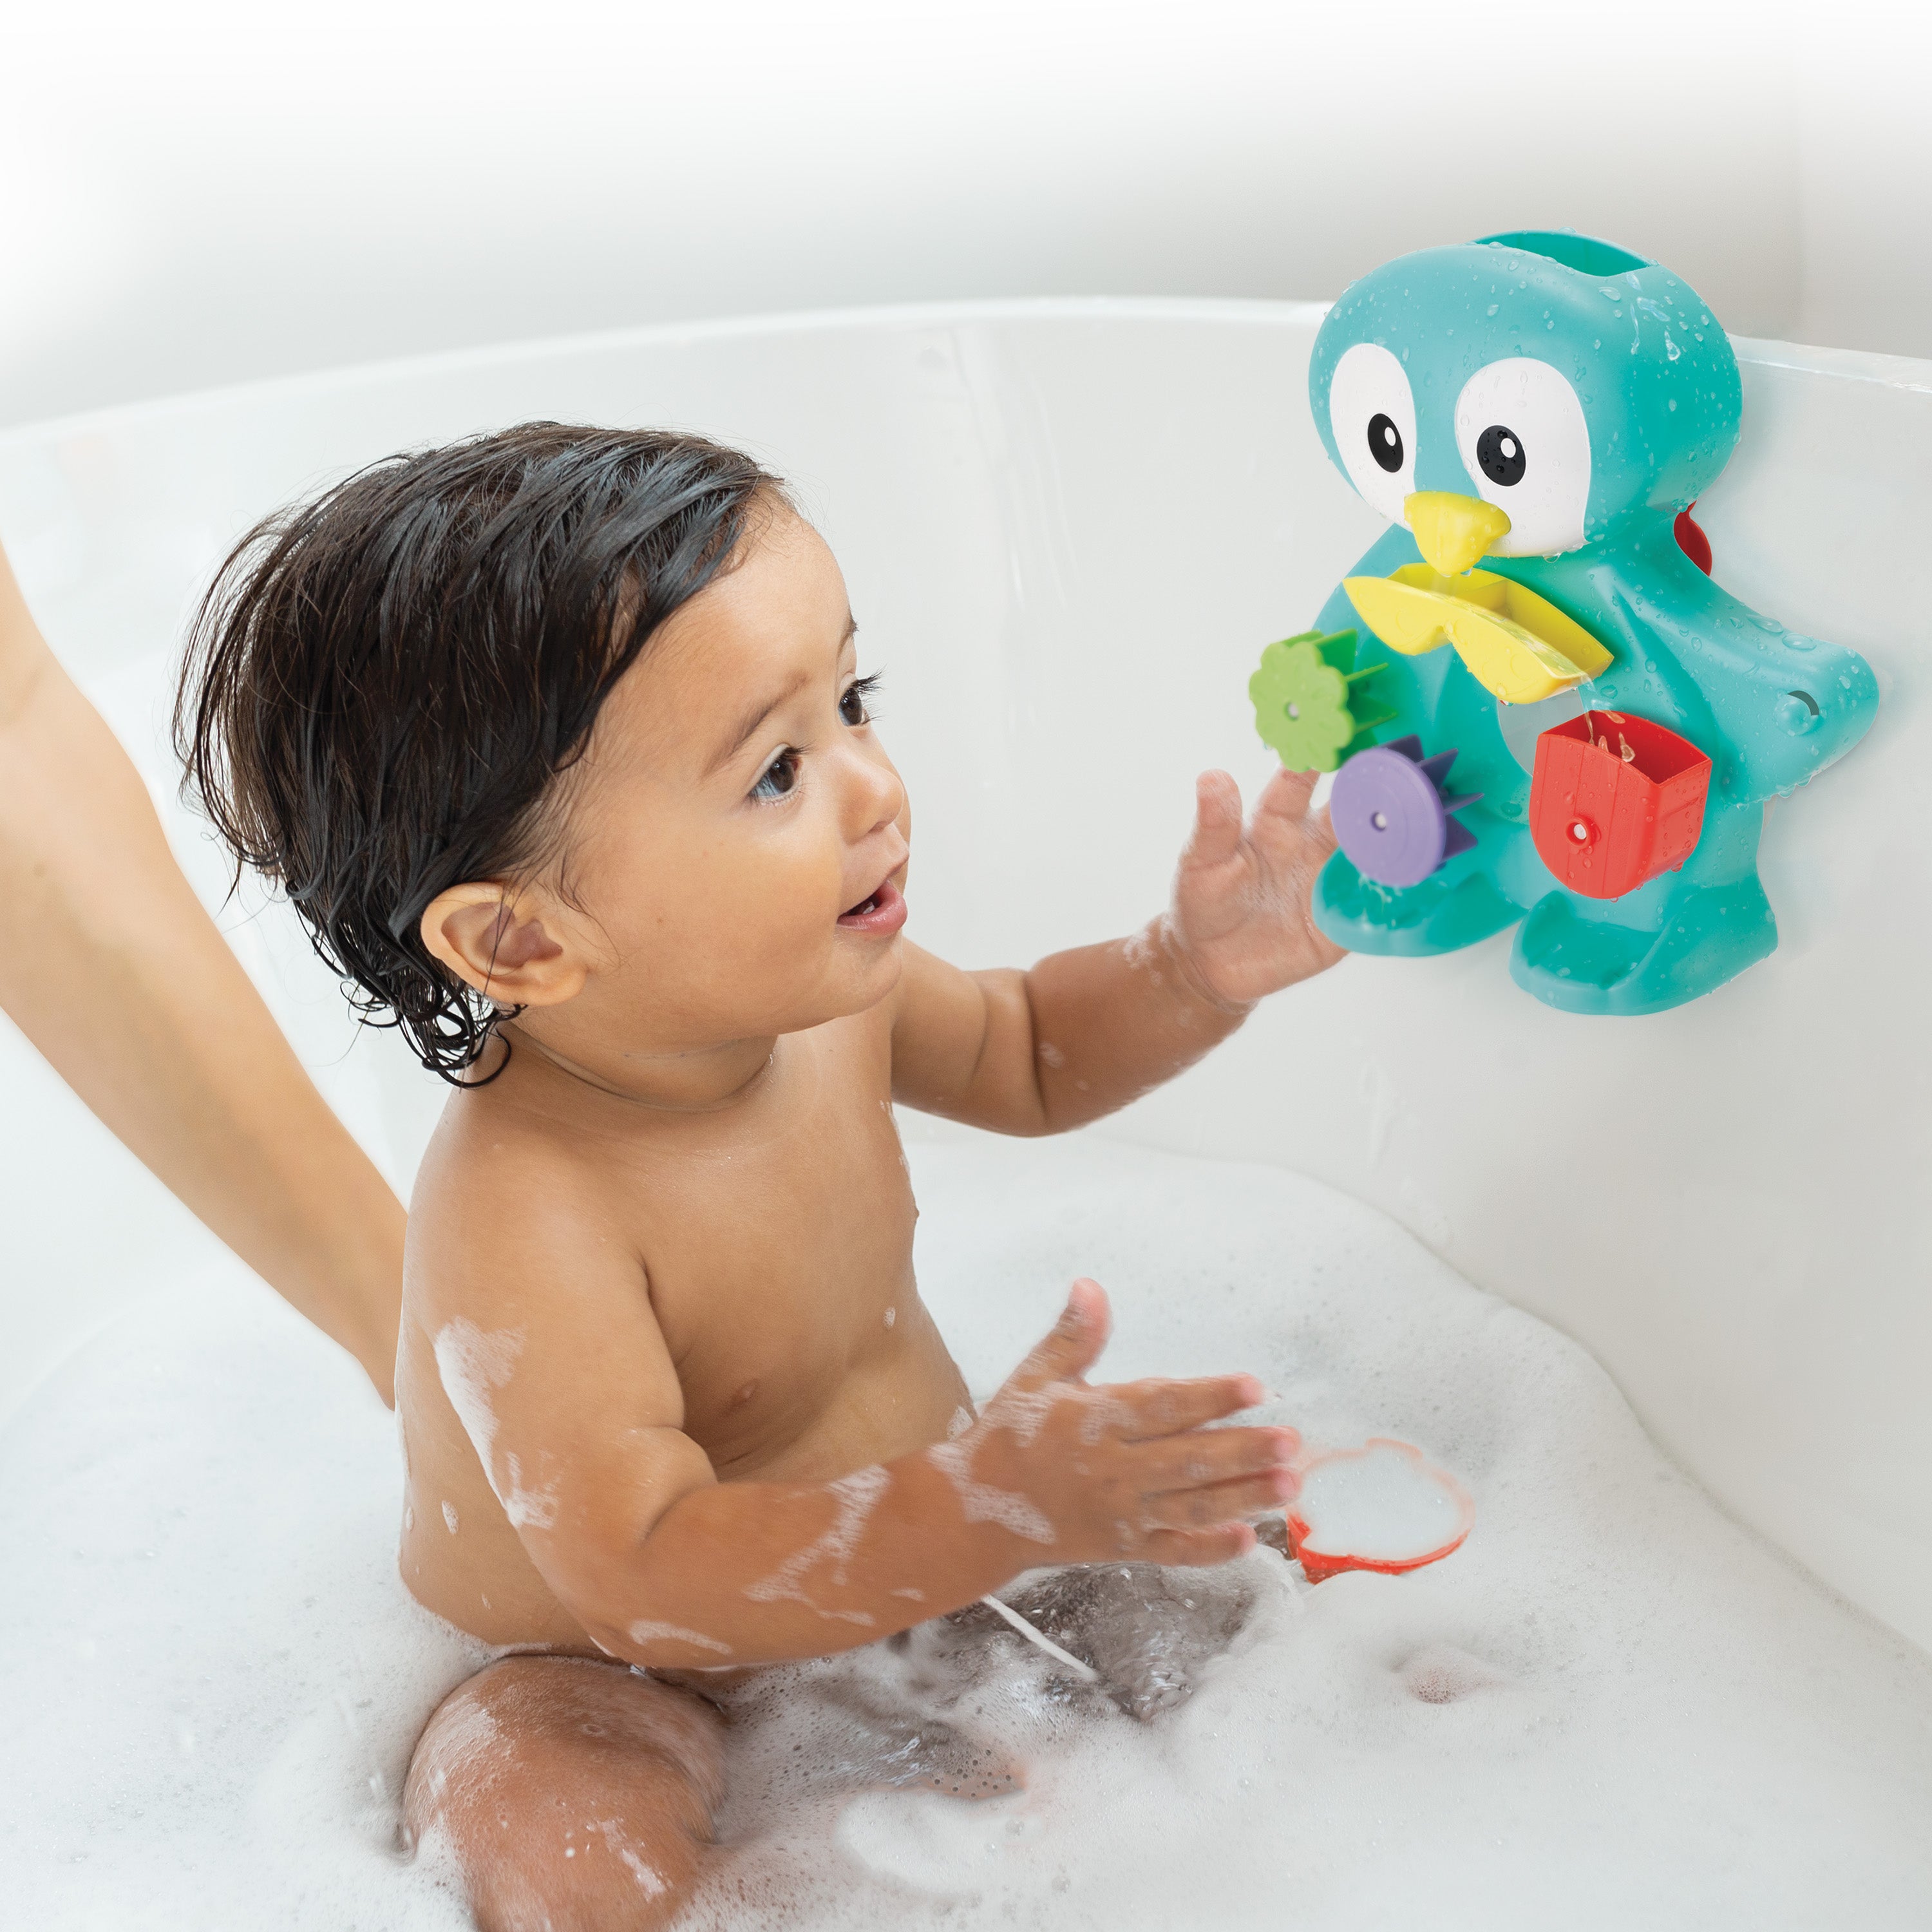 Infantino - Tub-a-Penguin Bath Time set